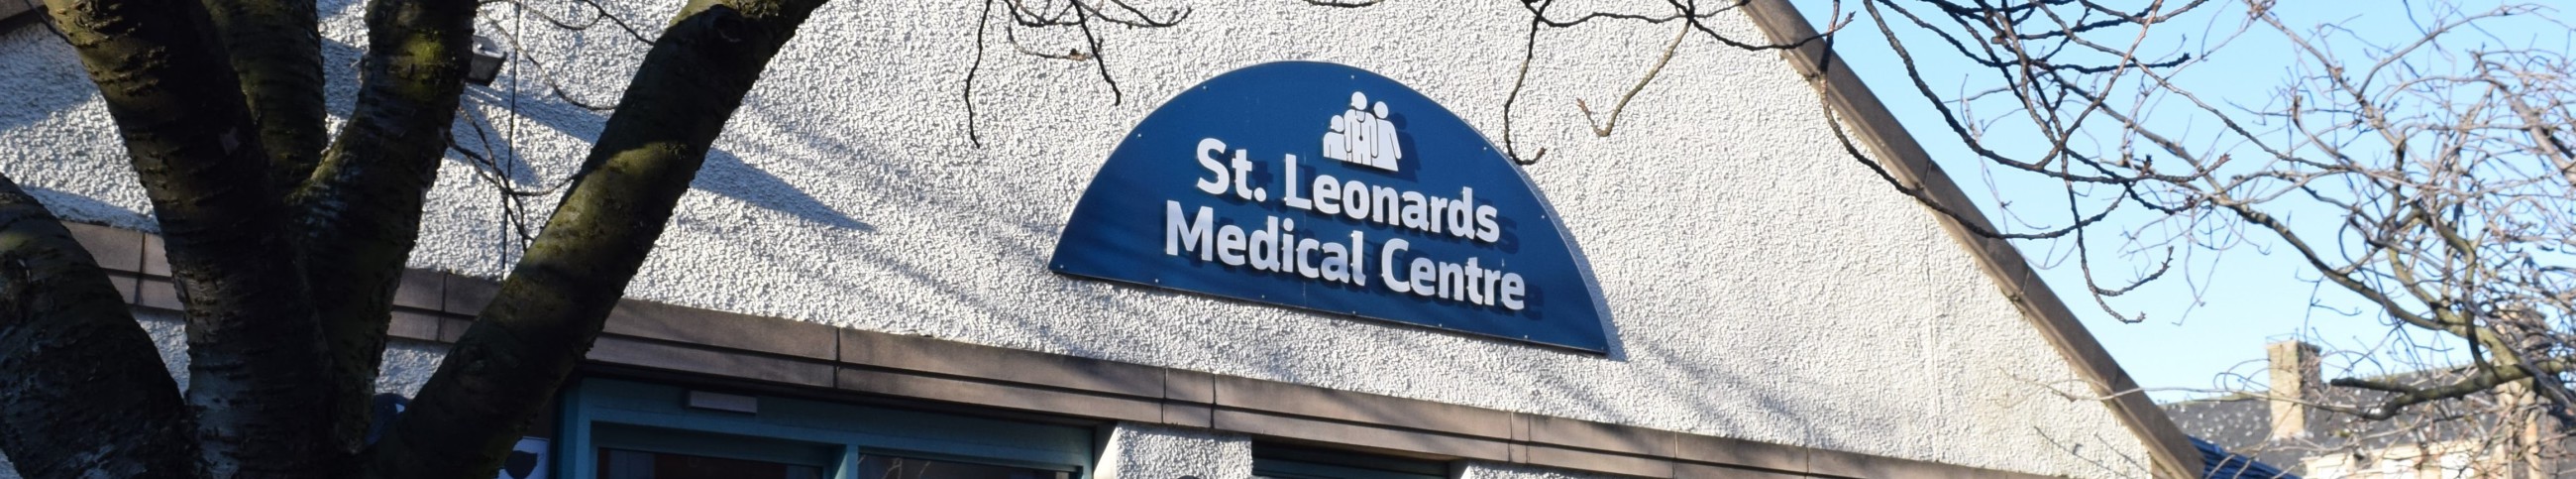 St. Leonards Medical Practice